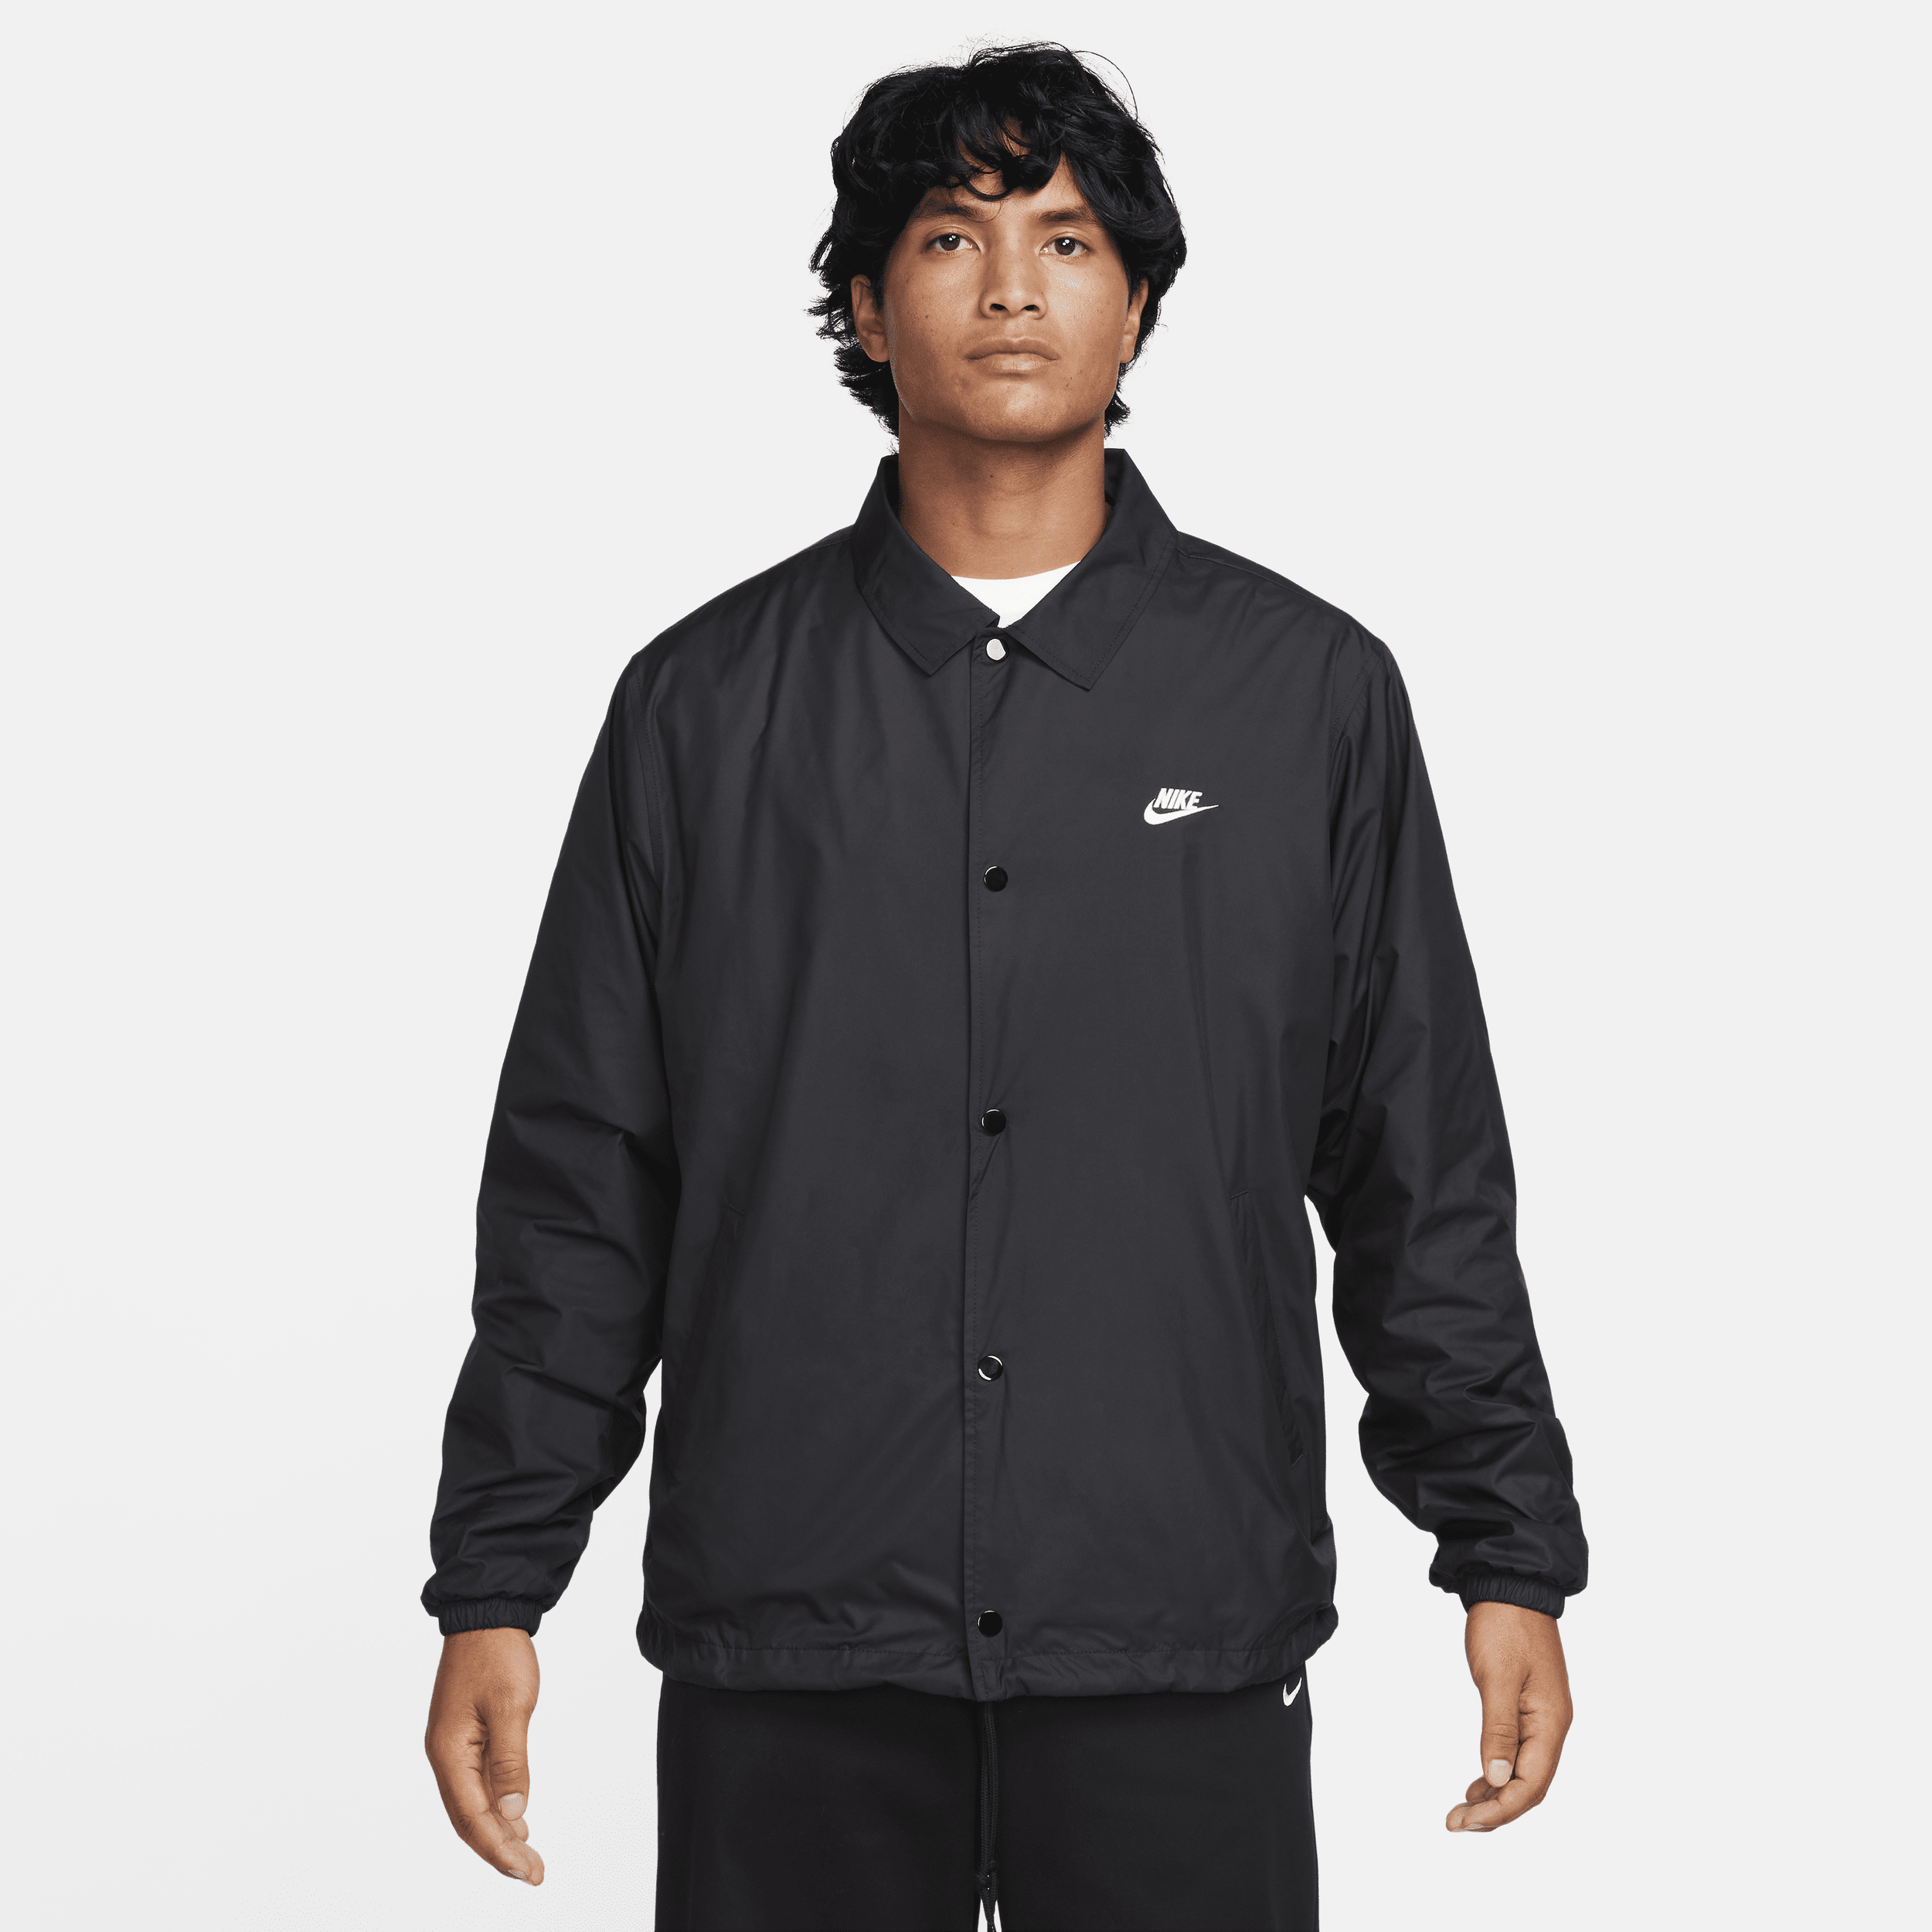 Coach jacket Nike Club – Uomo - Nero